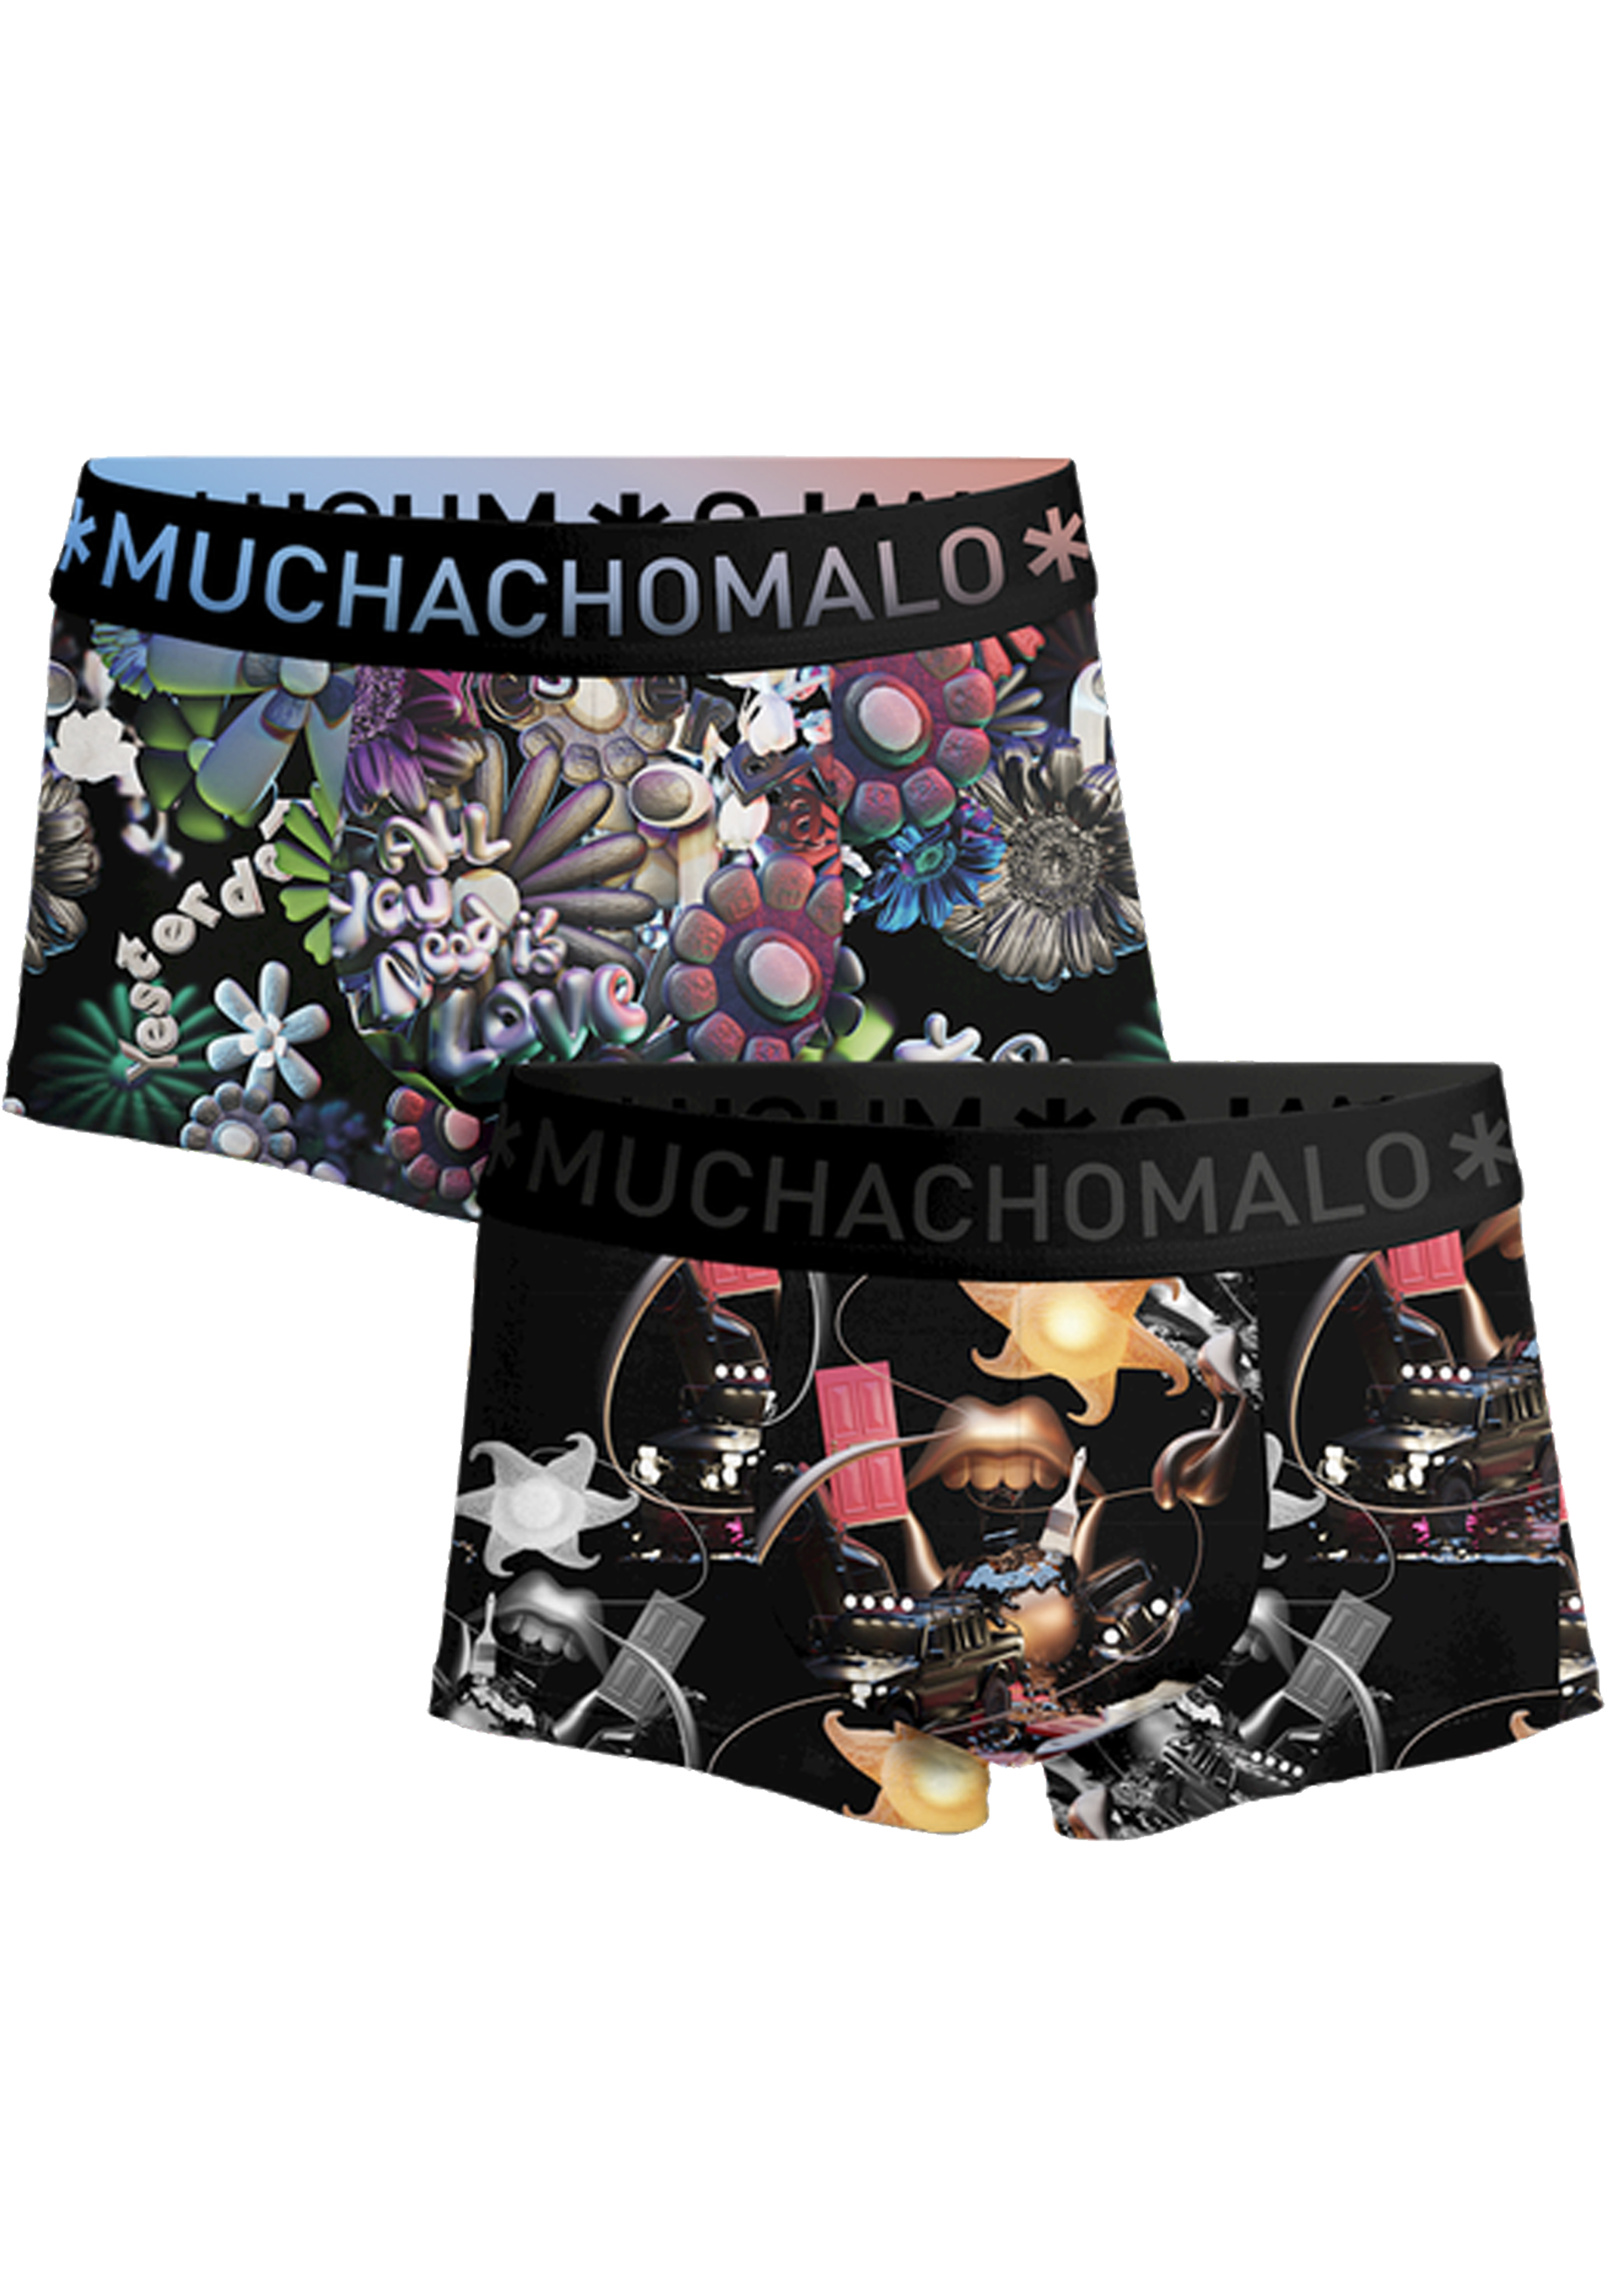 Muchachomalo boxershorts, heren boxers kort (2-pack), Rolling Stones Beatles